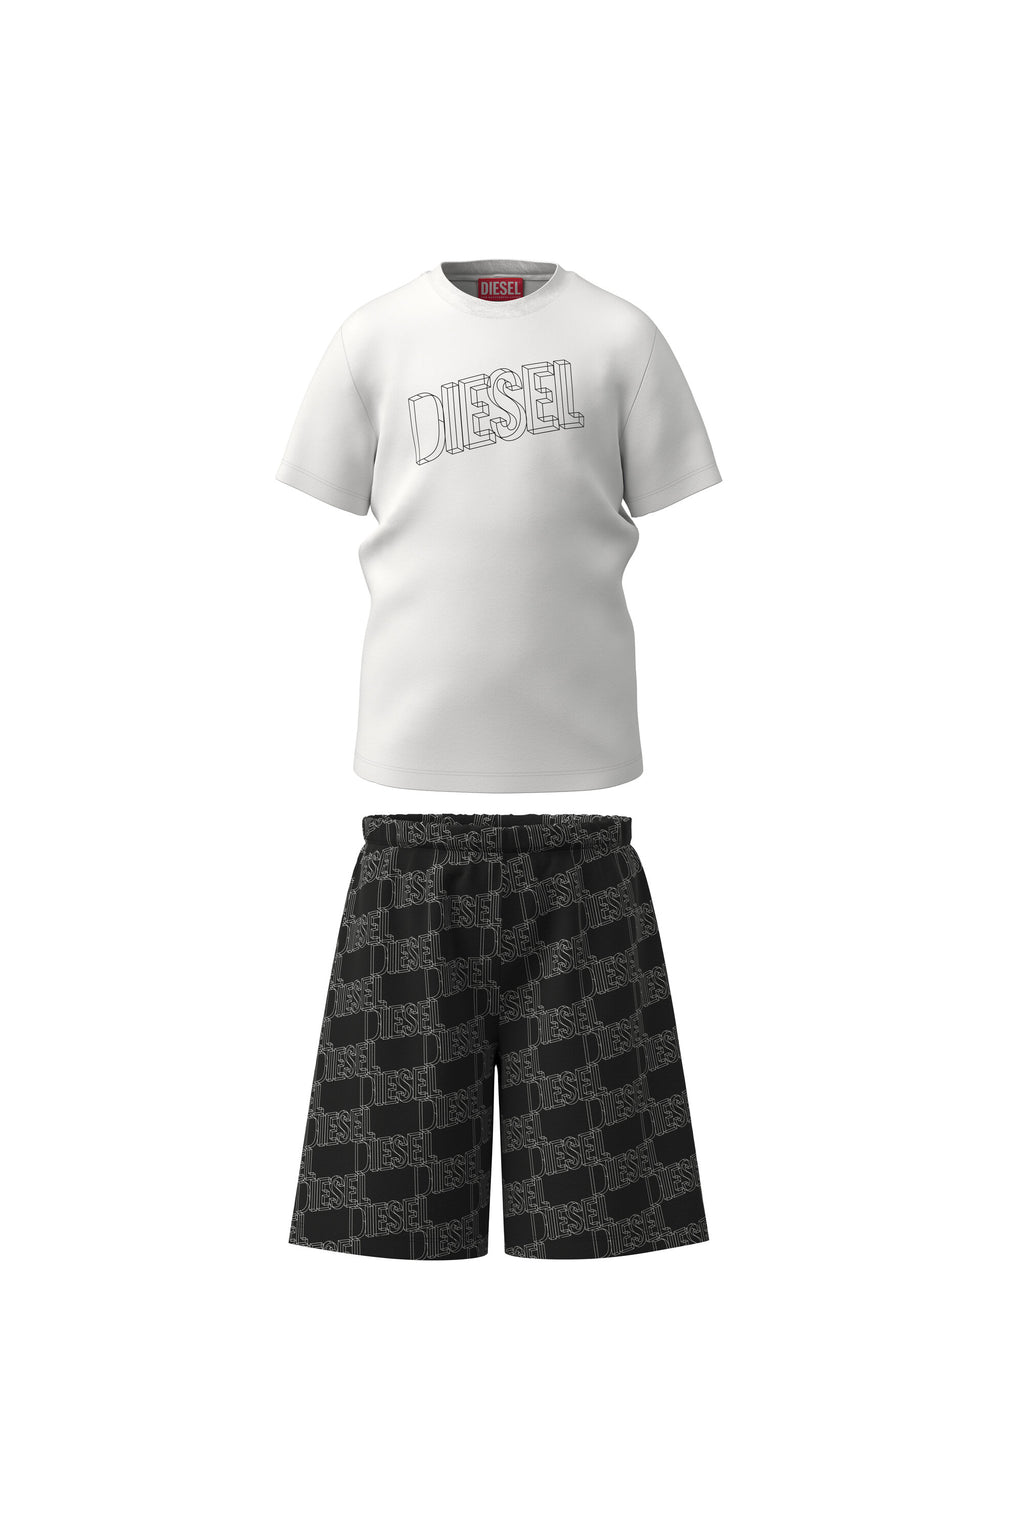 Black and white jersey short pajamas with logo